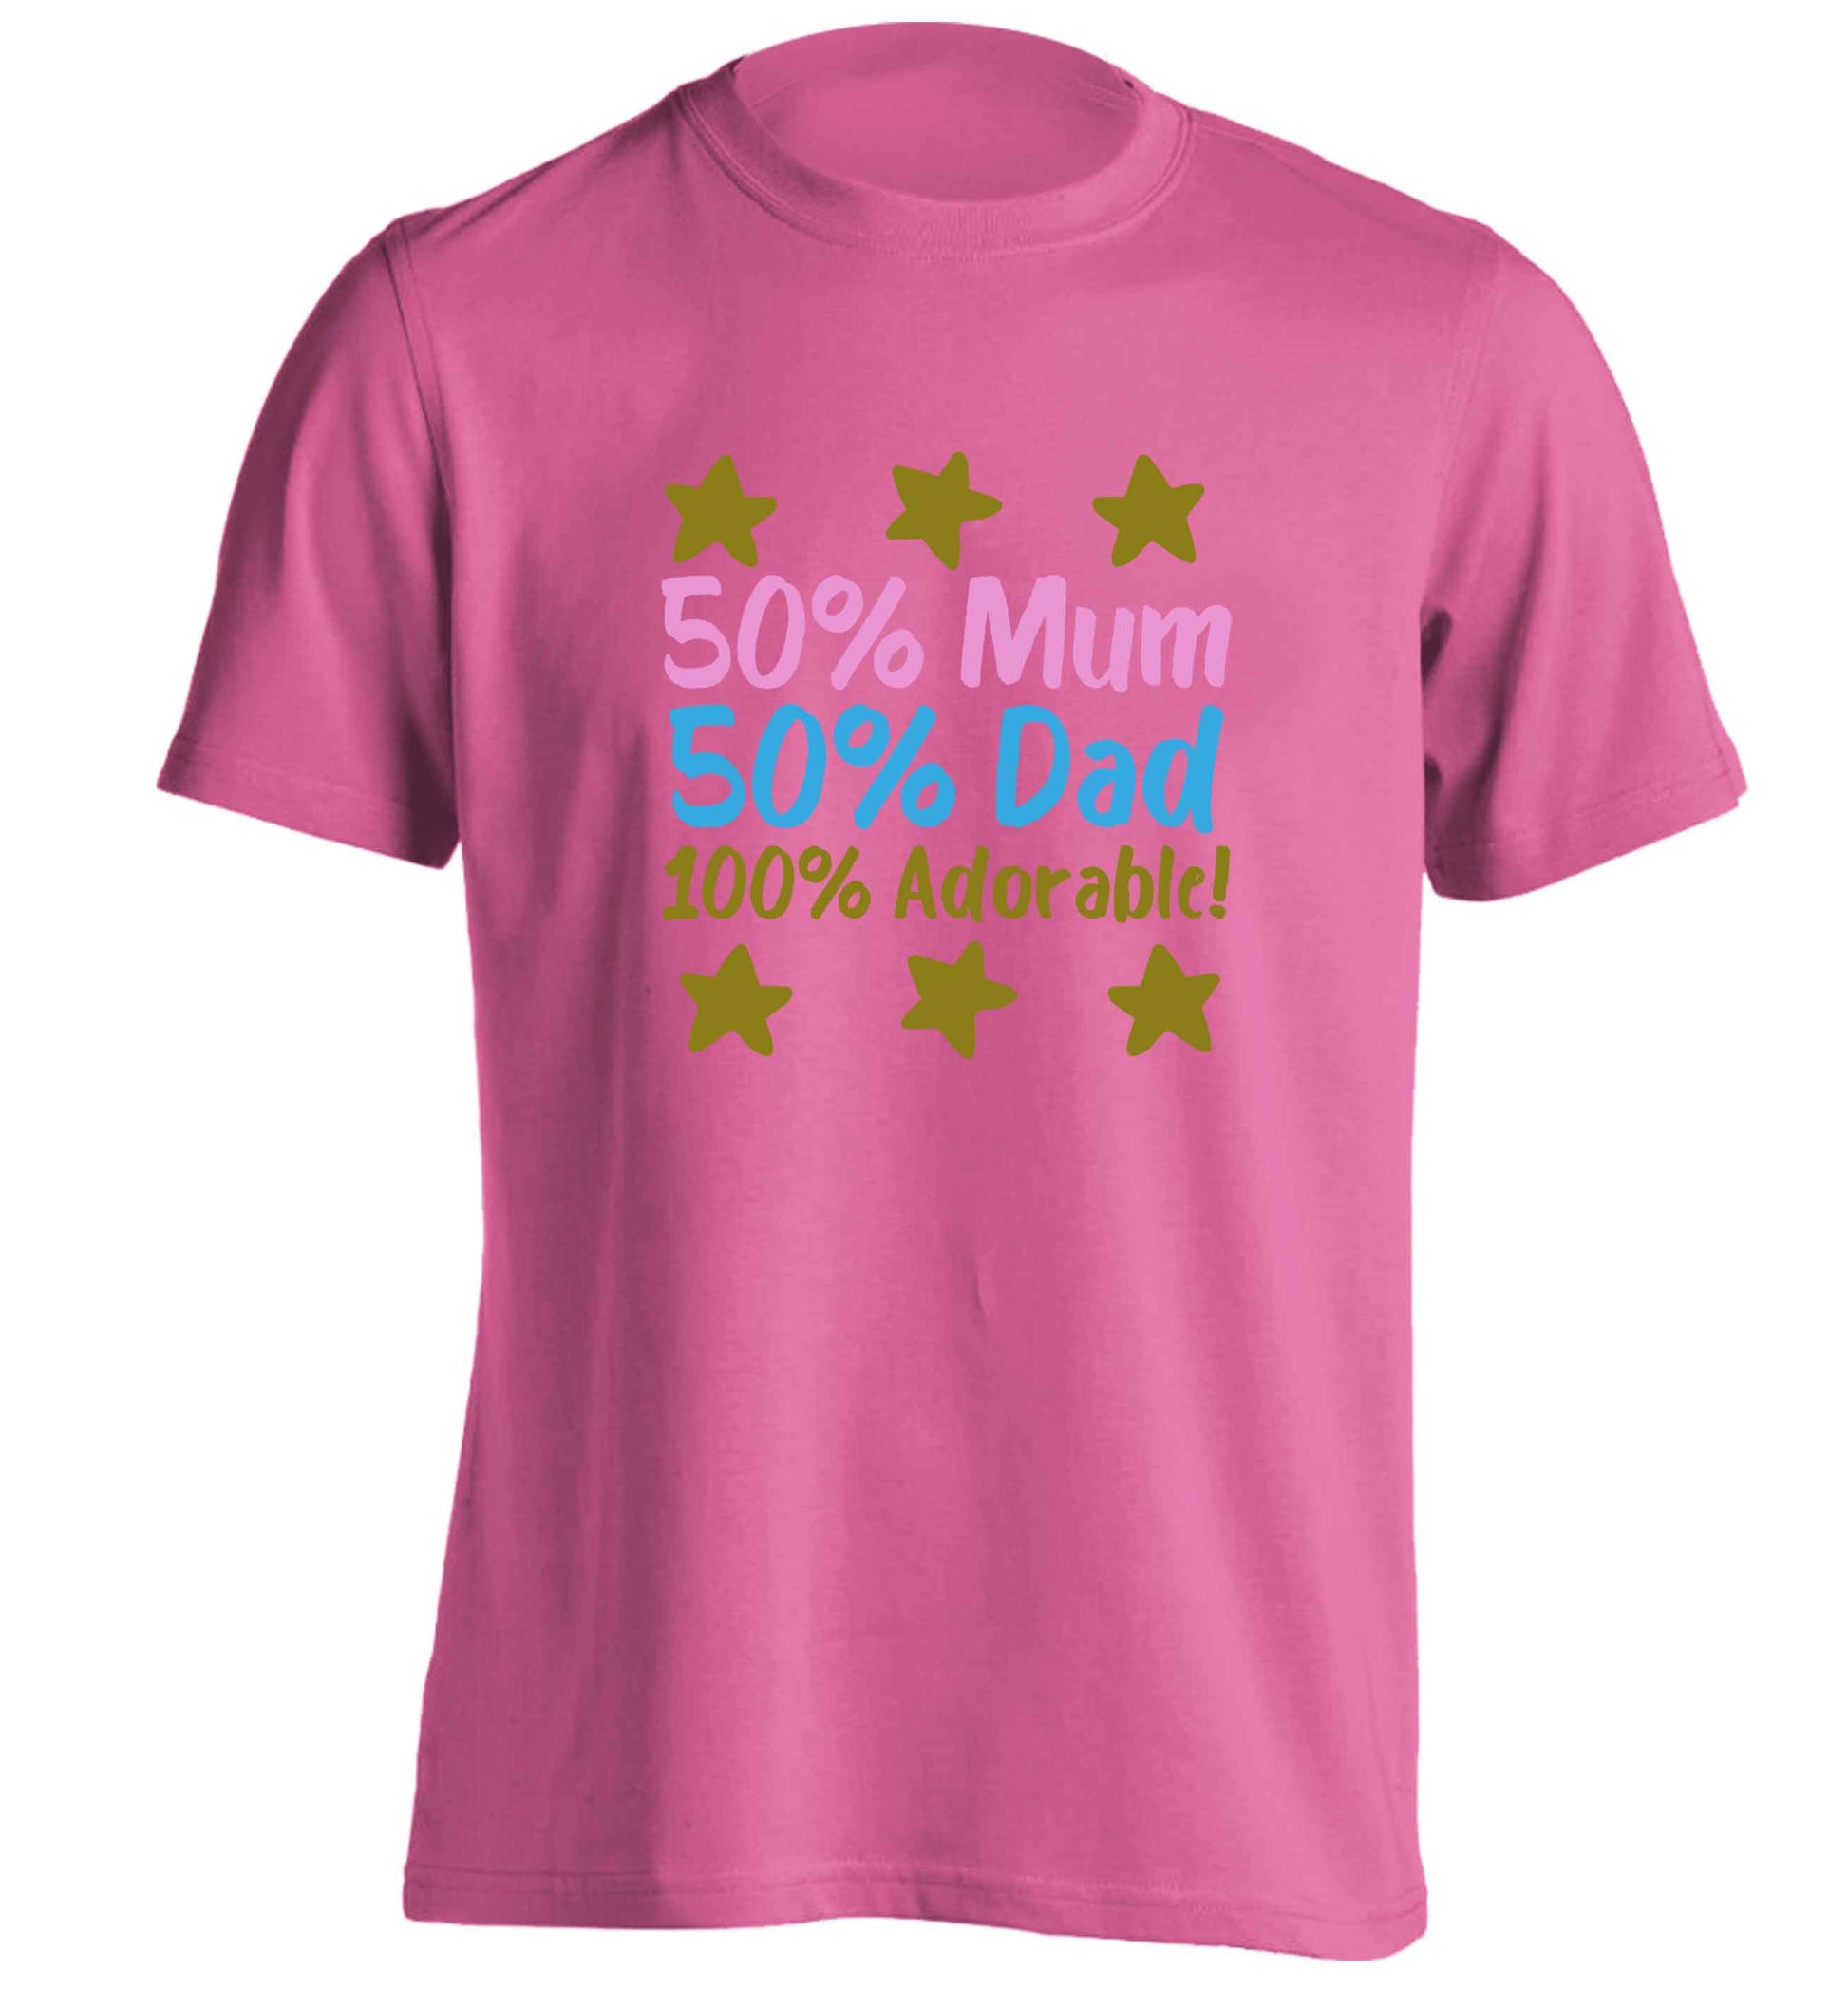 50% mum 50% dad 100% adorable adults unisex pink Tshirt 2XL